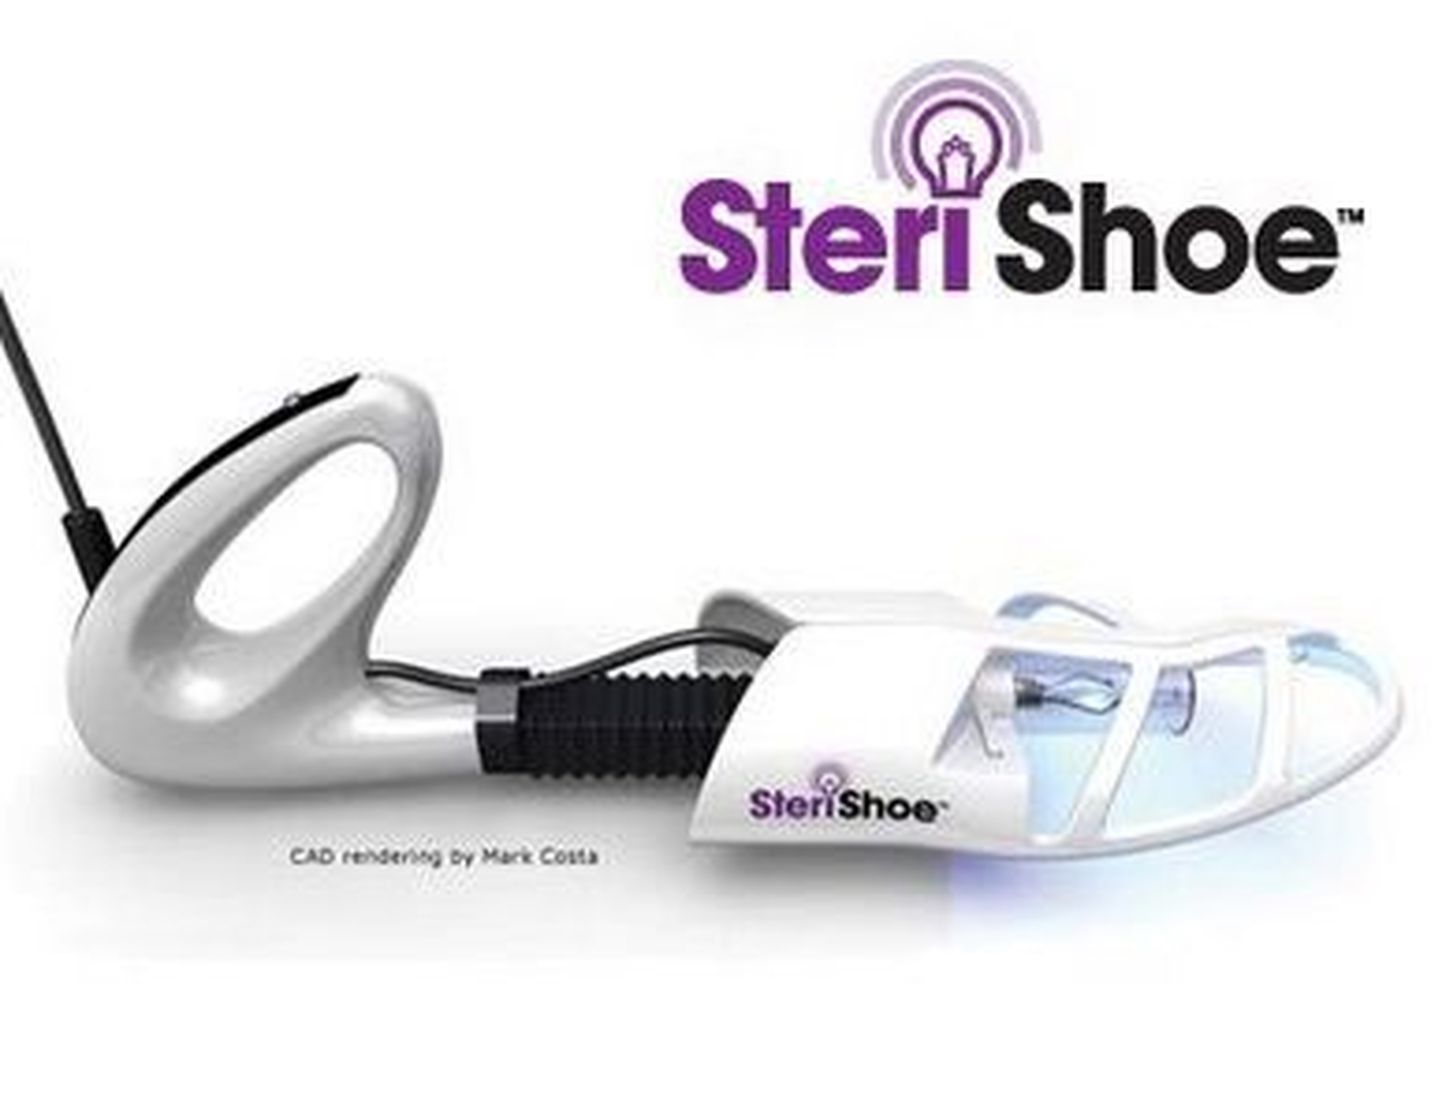 SteriShoe